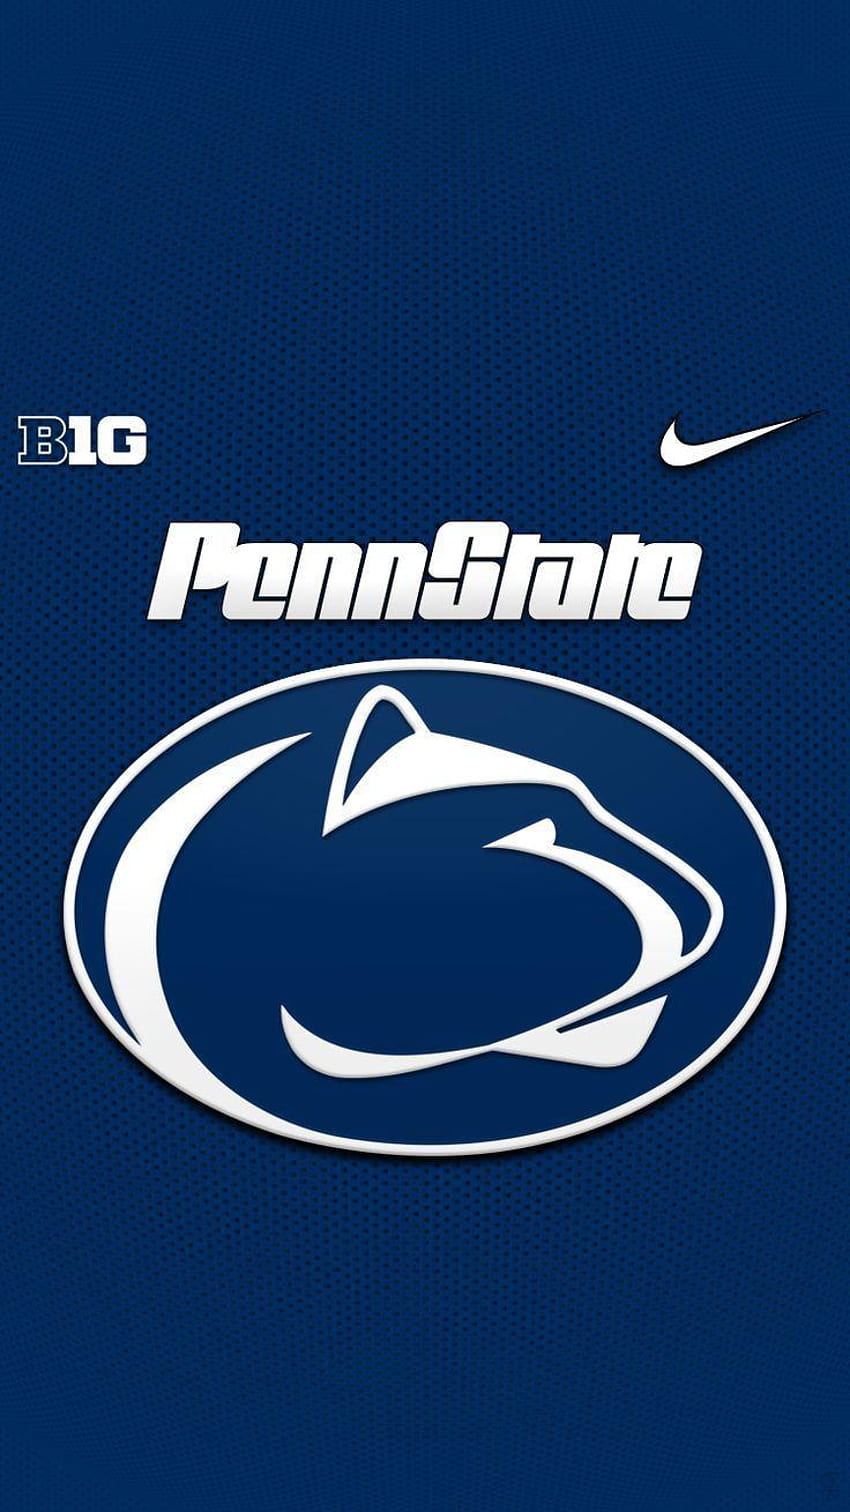 Penn State, university of pennsylvania HD phone wallpaper